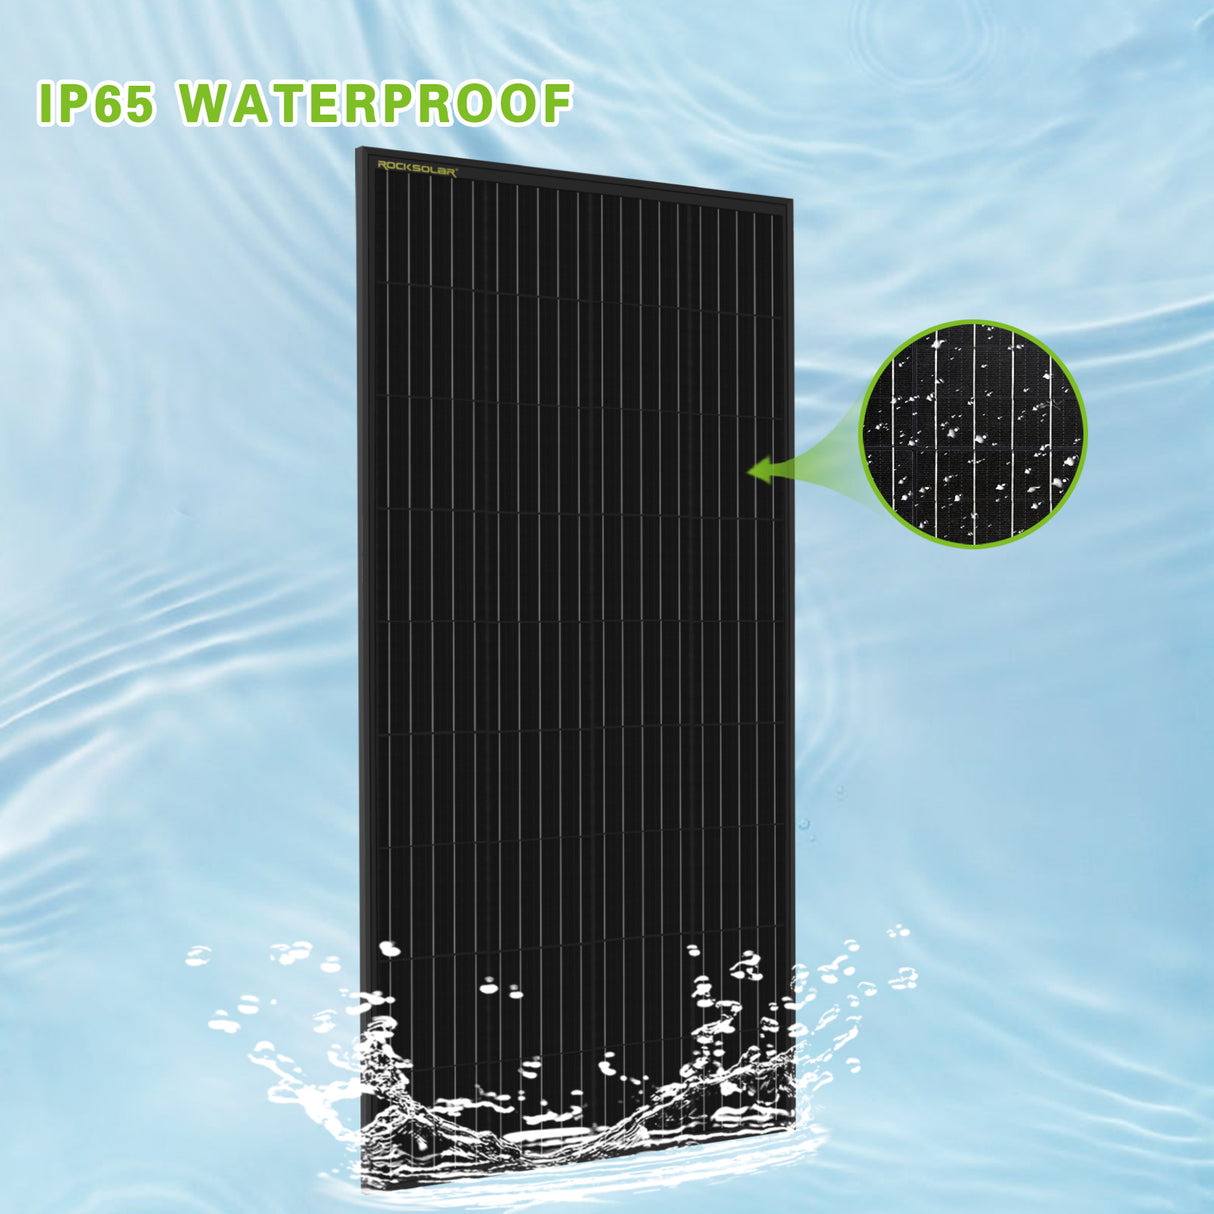 ROCKSOLAR 400W 2Pcs 12V Rigid Monocrystalline Solar Panel - Waterproof with Corrosion-Resistant Aluminum Alloy Frame